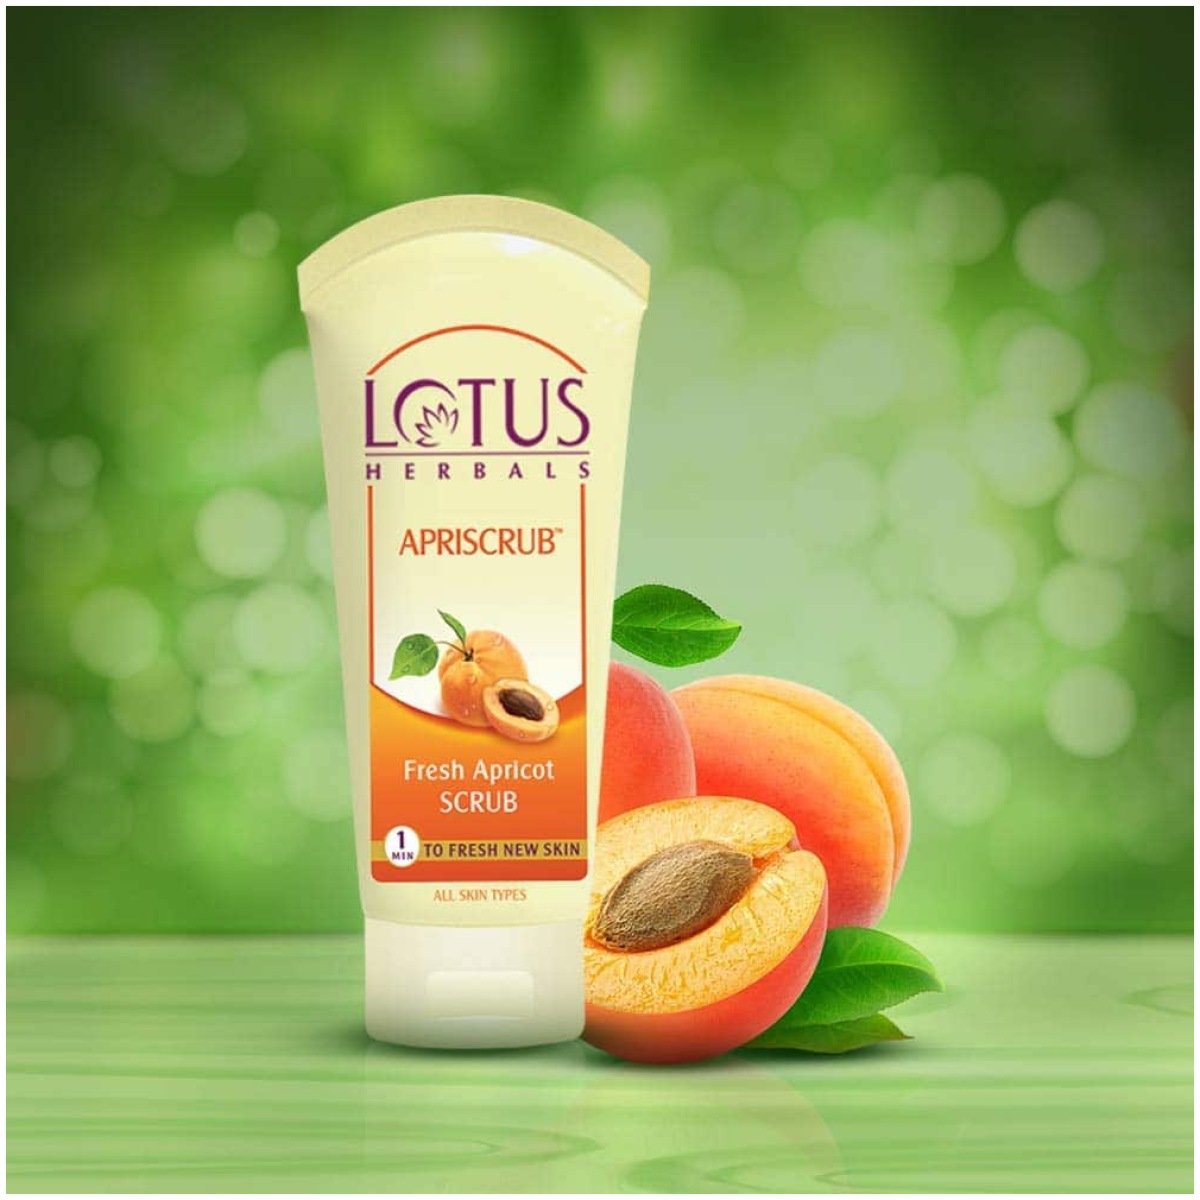 Lotus APRISCRUB Fresh Apricot Scrub